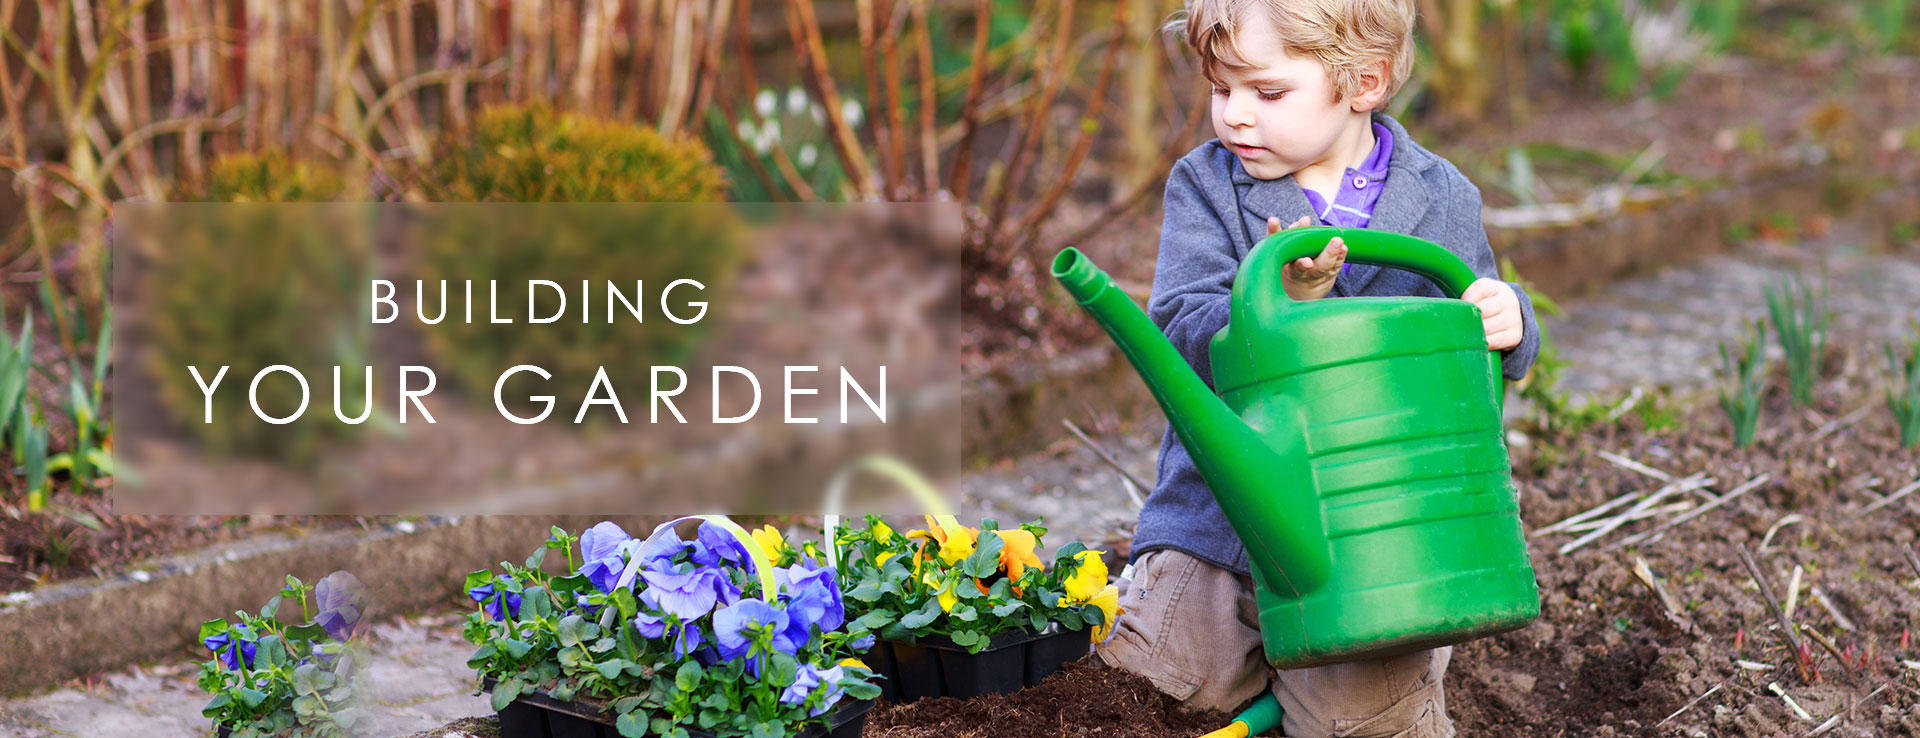 Building your healthy garden